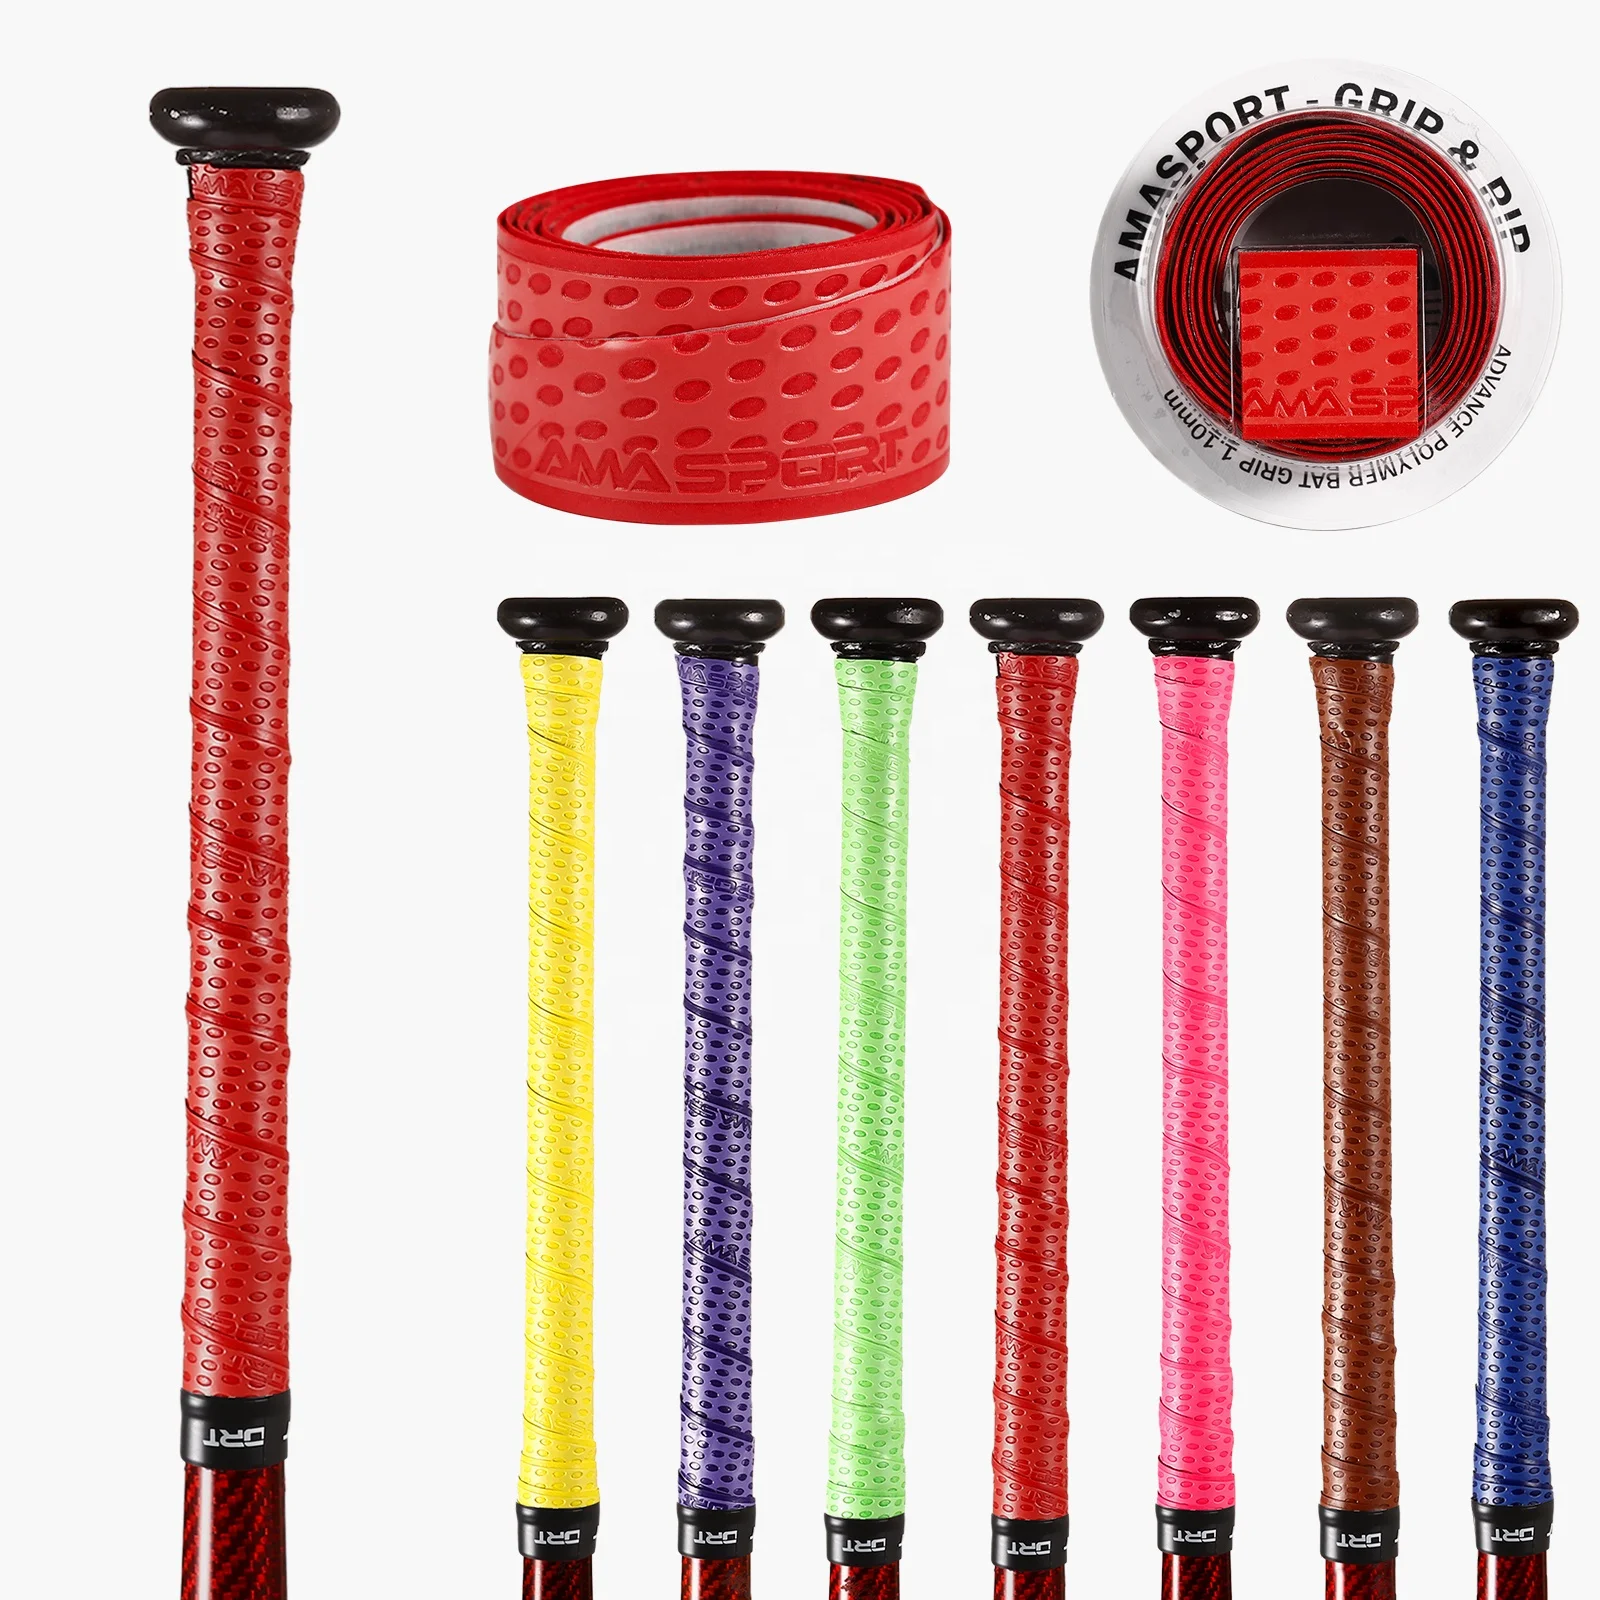 

High quality sticky PU leather field hockey grip baseball bat grip tape, Customized color